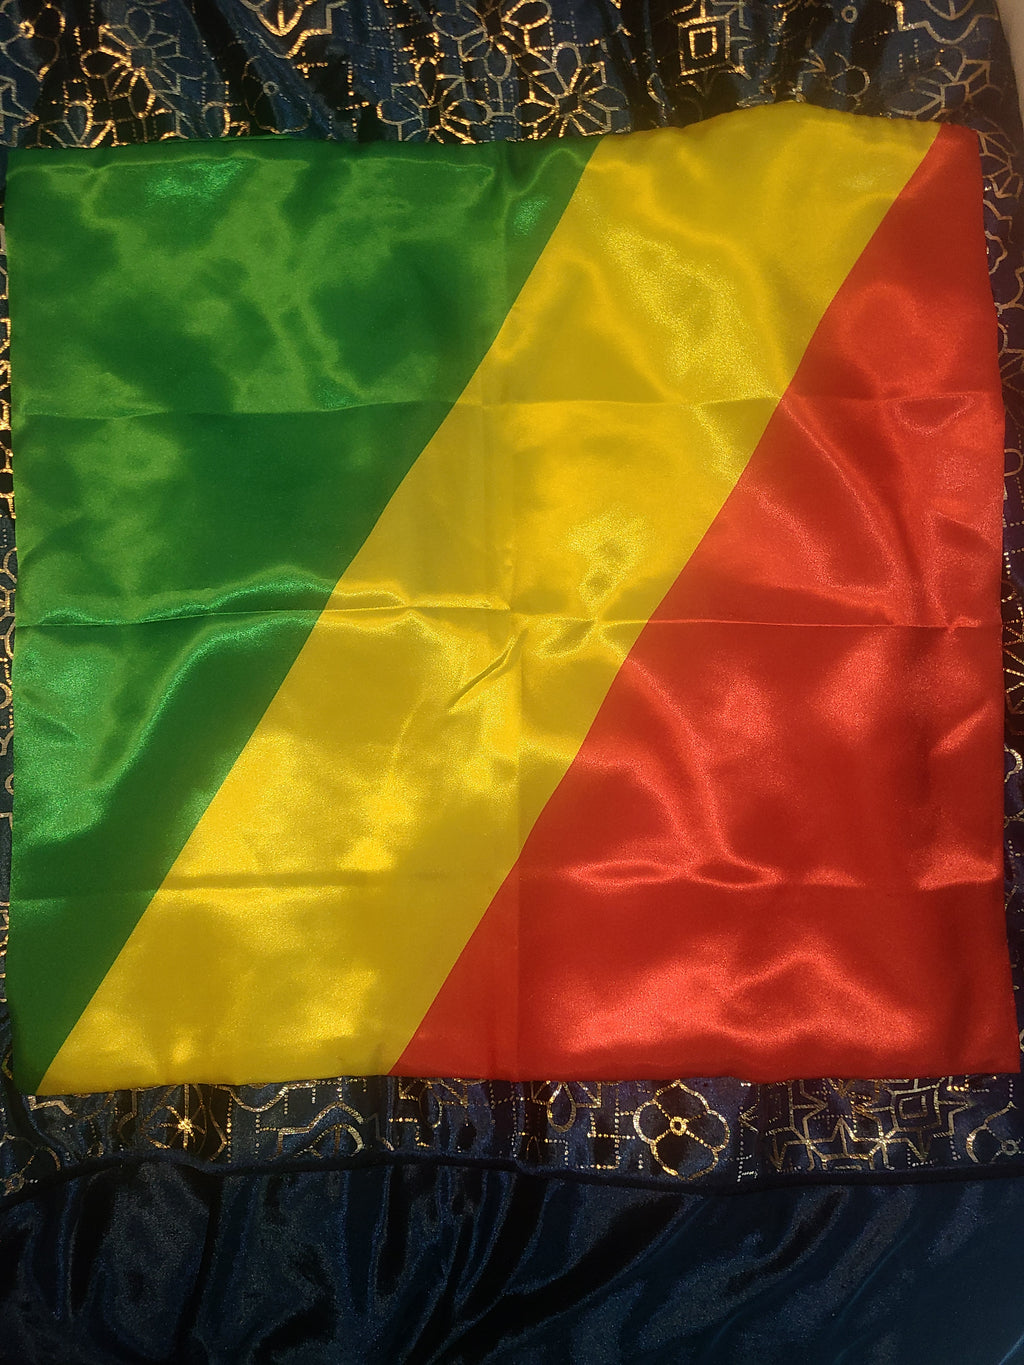 Congo Brazzaville - Pillowcase